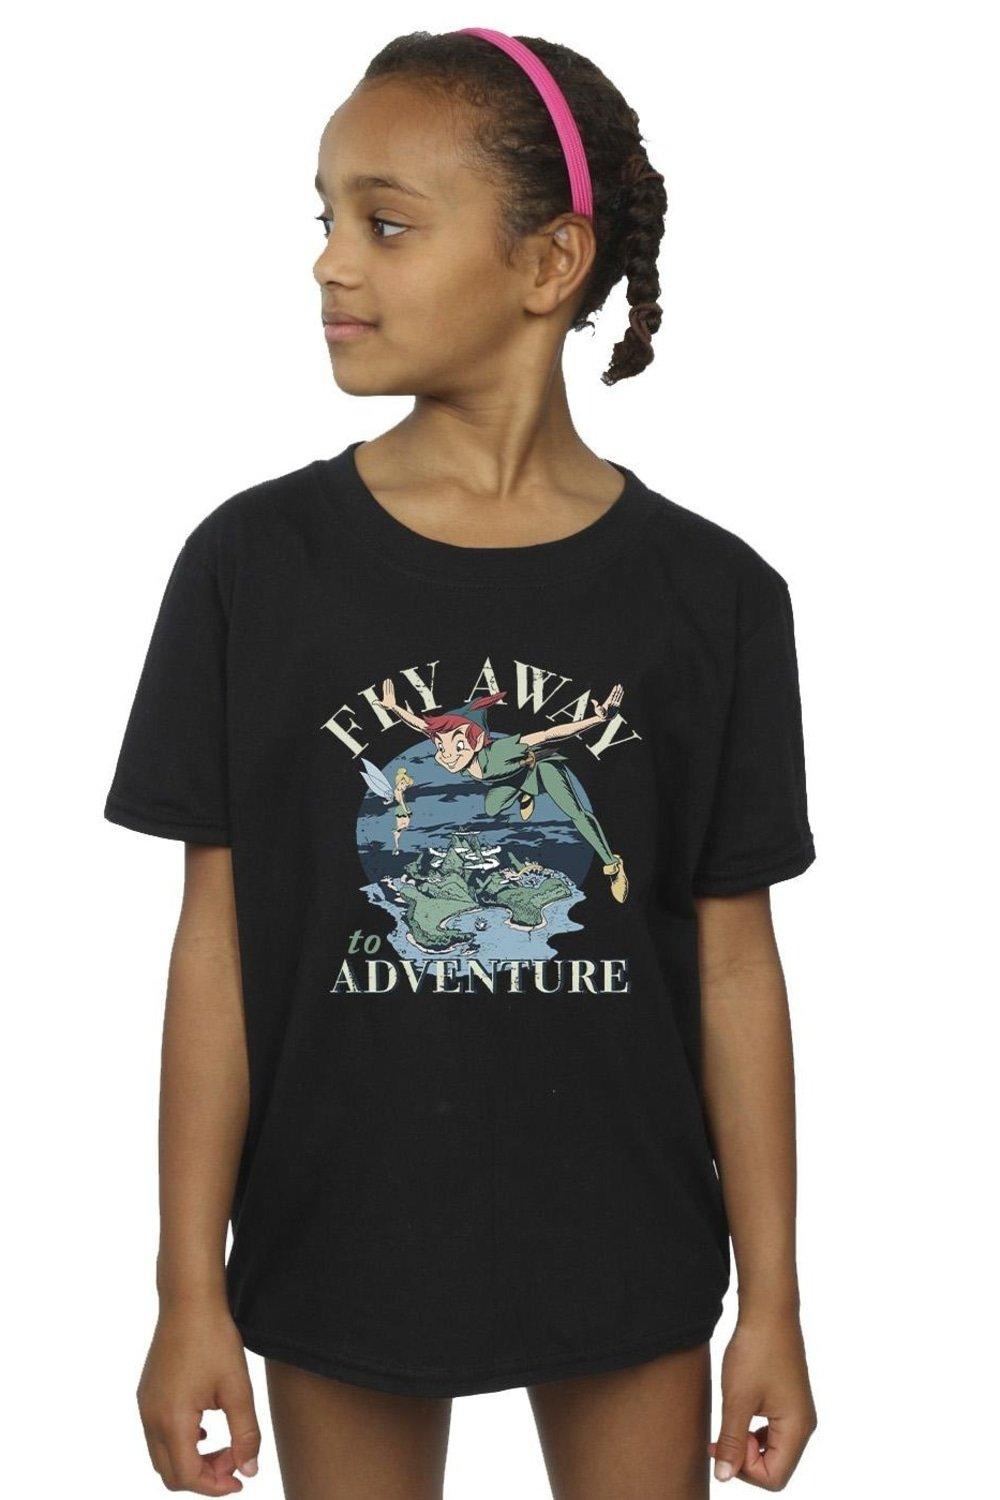 Peter Pan Fly Away To Adventure Cotton T-Shirt